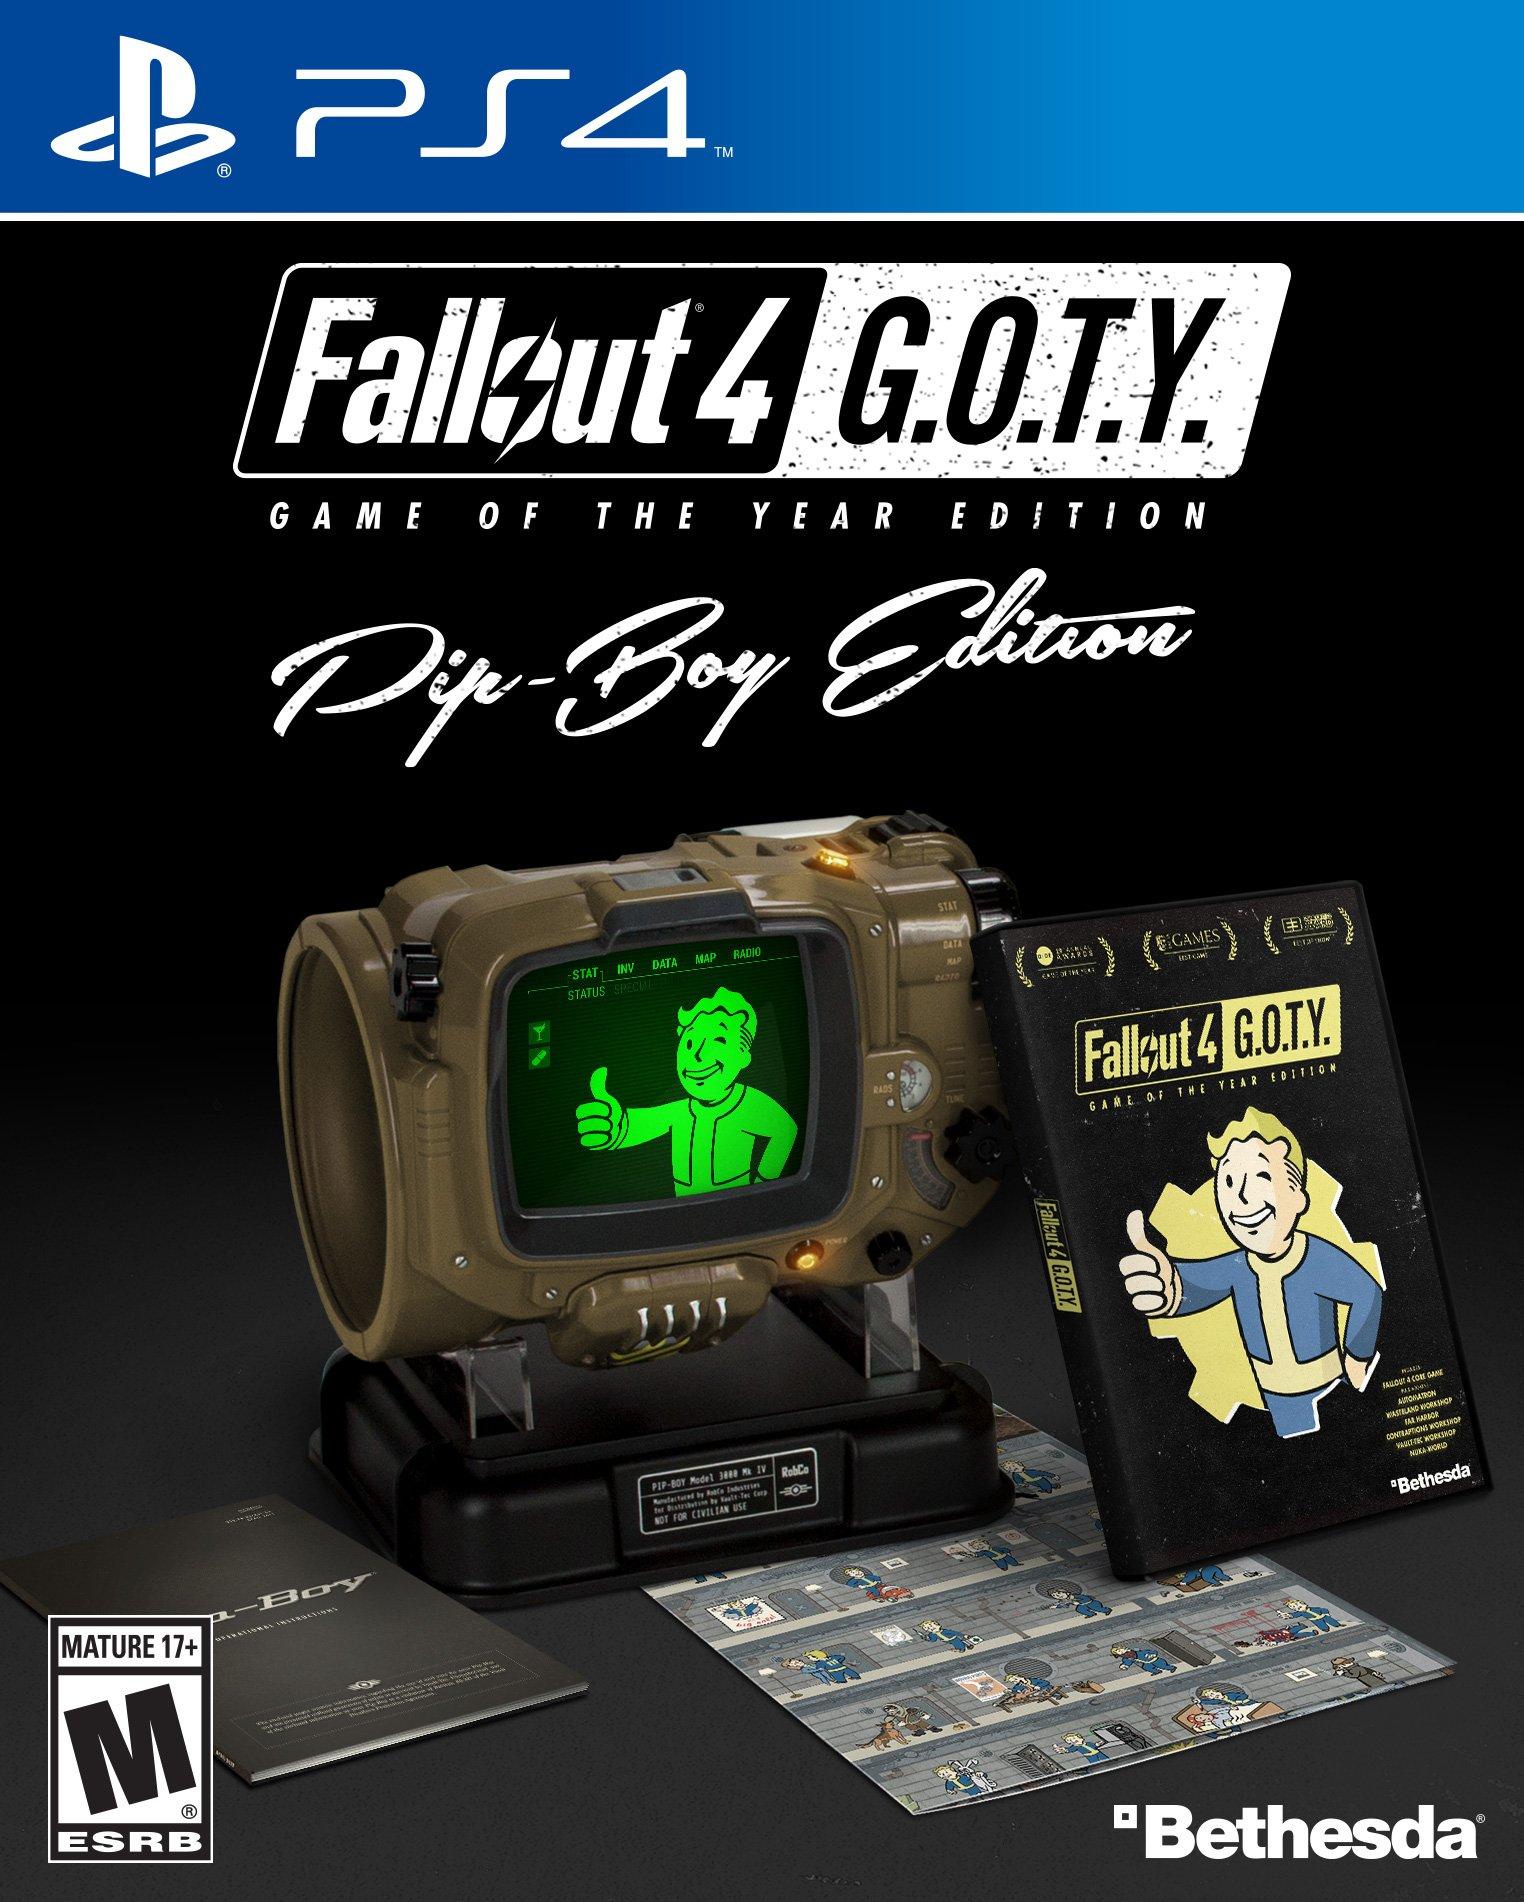 Fallout 4 game of the year edition что входит в комплект фото 110